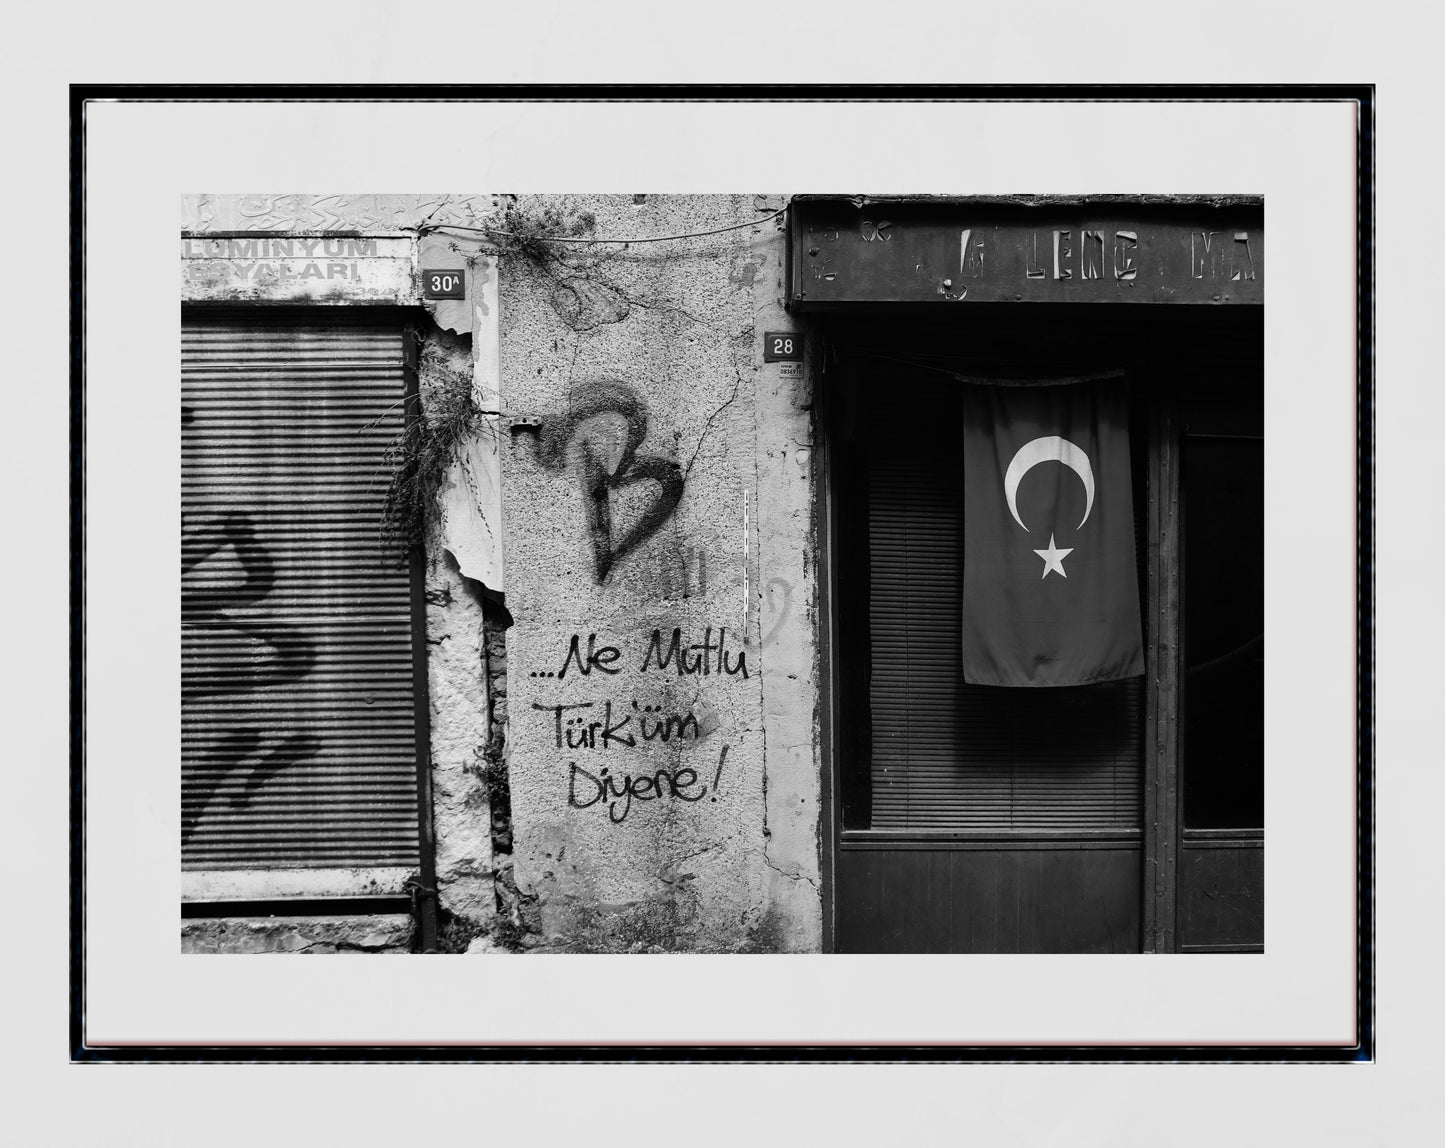 Turkey Decor Istanbul Turkish Street Graffiti black And White Photography Print